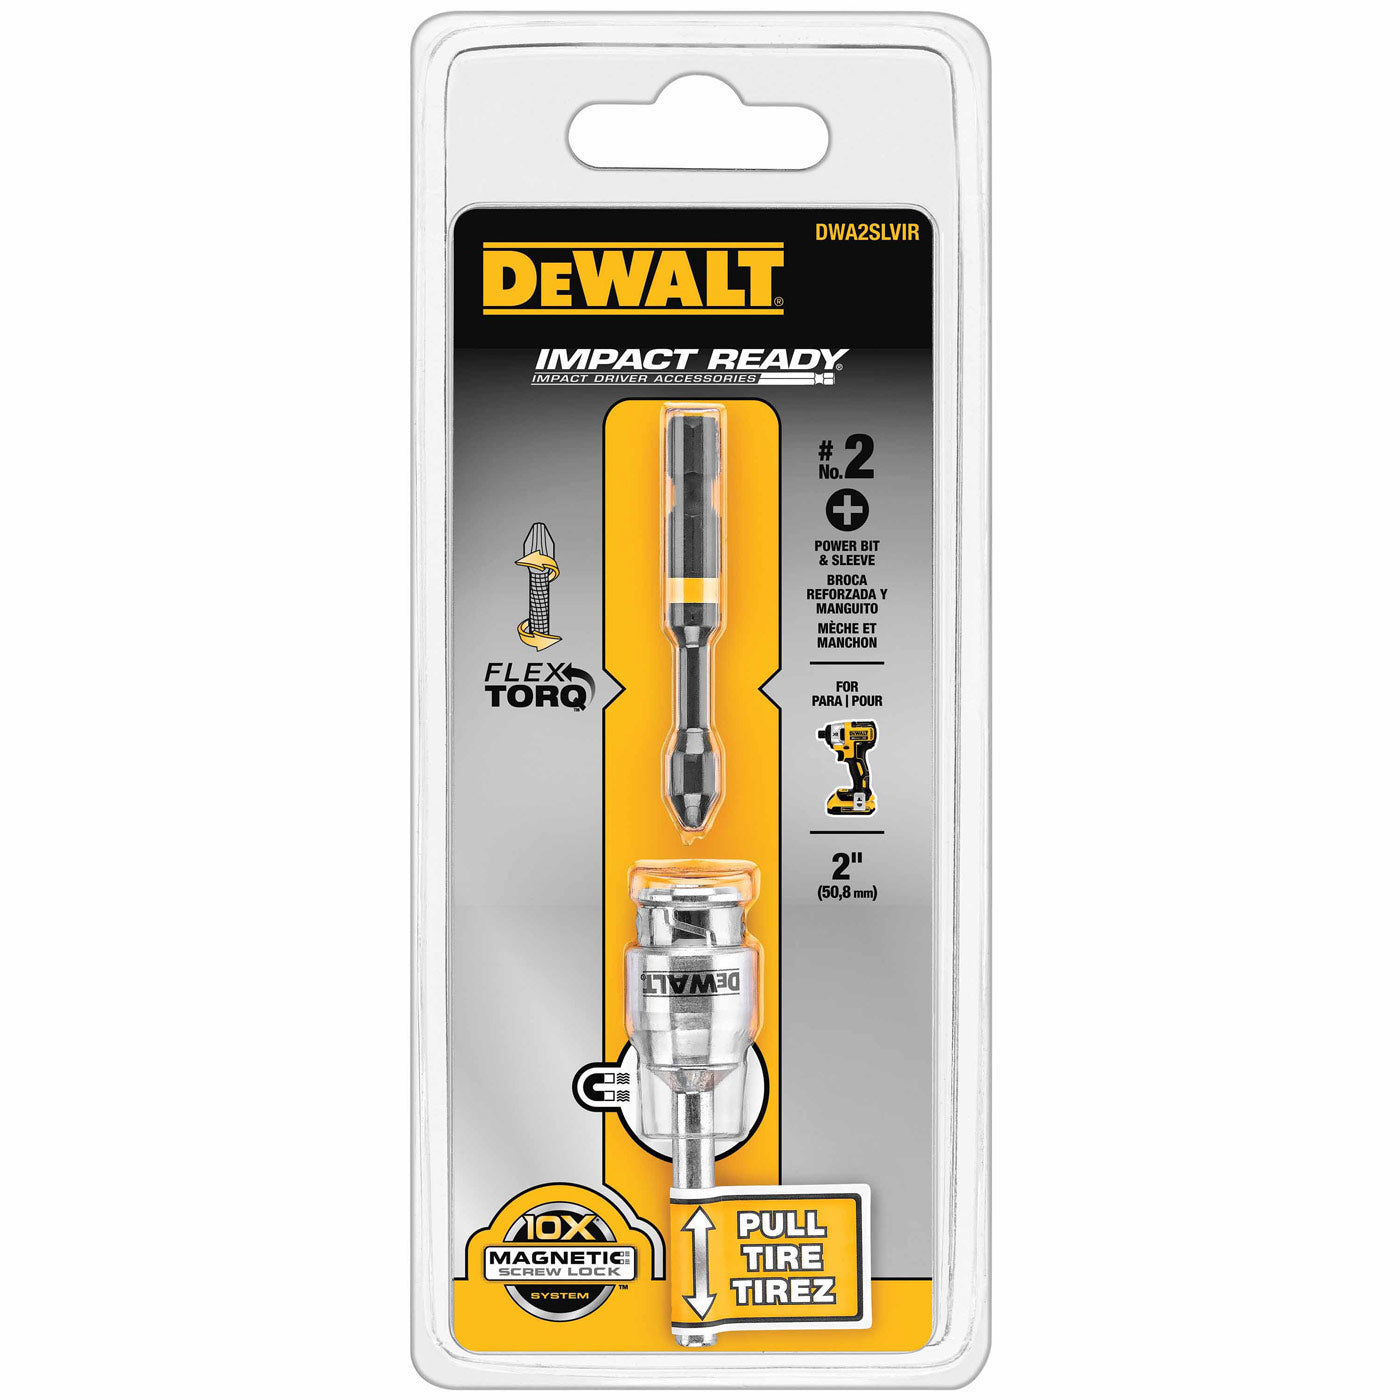 DeWalt DWA2SLVIR Screwlock Sleeve -2-1/4 IMPACT READY FlexTorq Bit